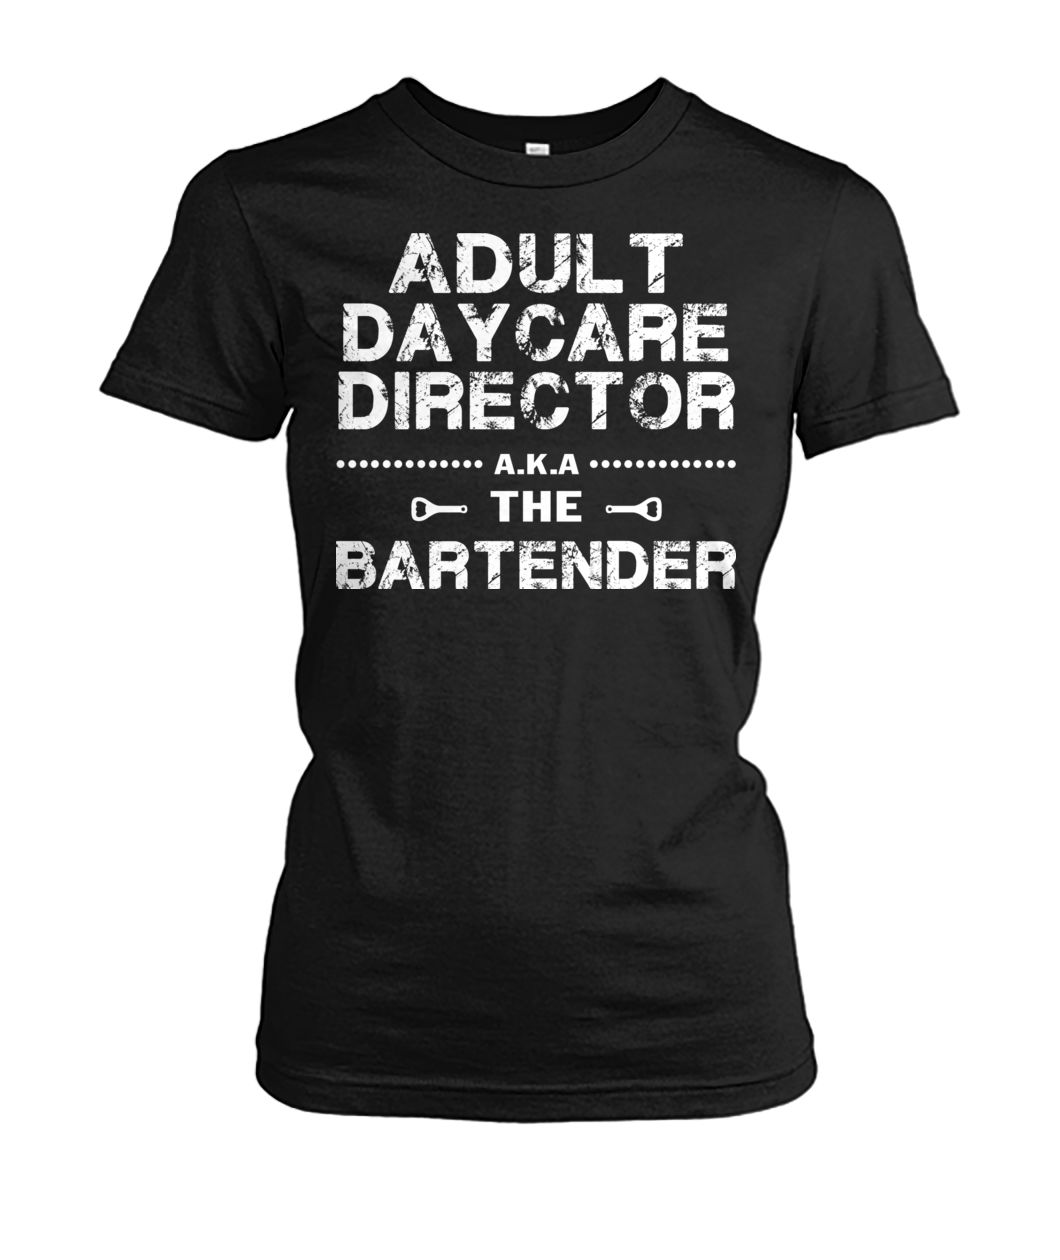 Adult daycare director aka the bartender women's crew tee